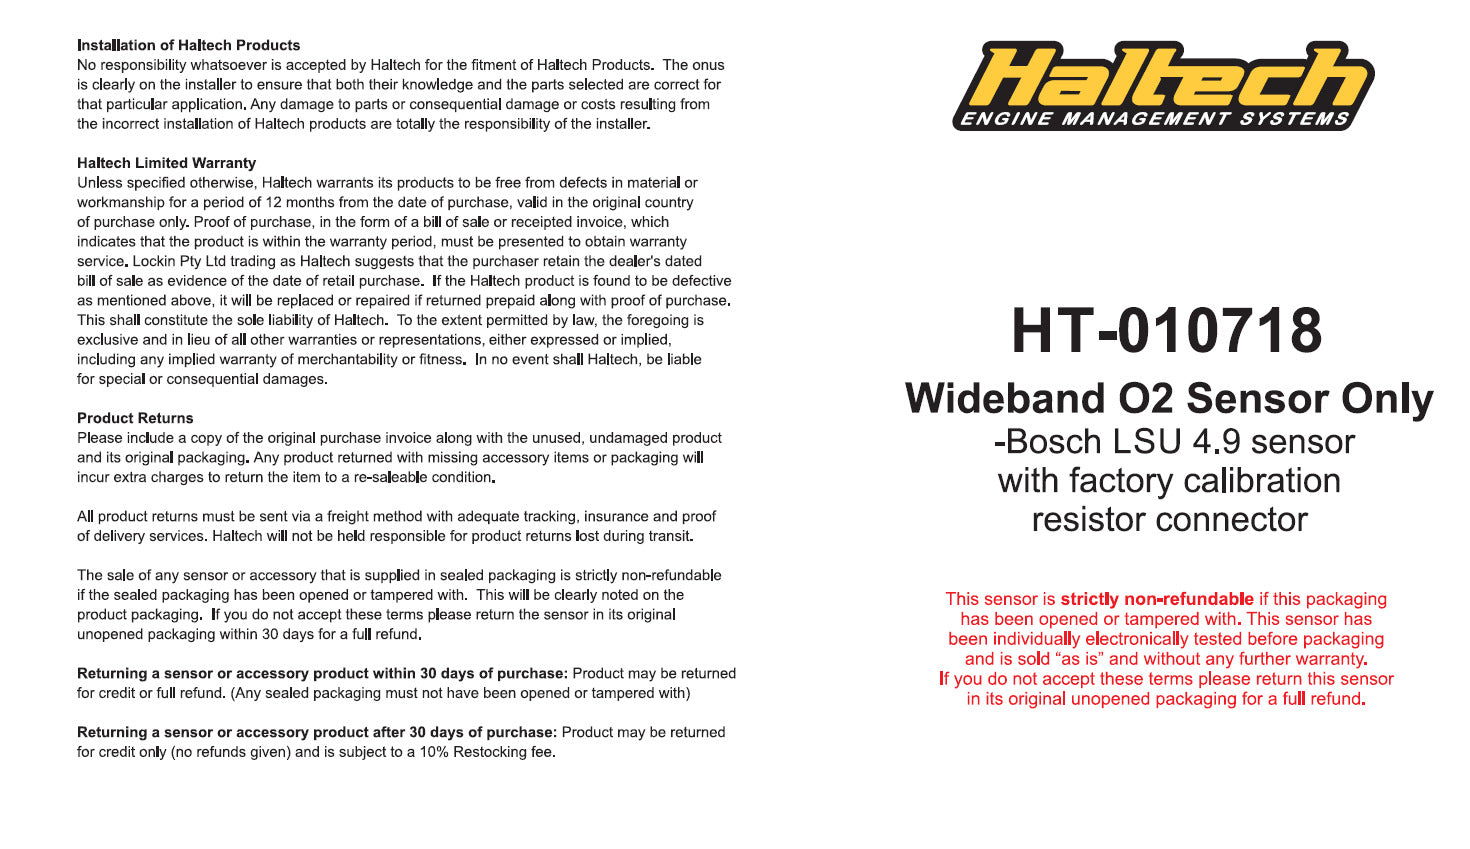 Haltech Wideband Sensor only - Bosch LSU 4.9 with Factory Connector HT-010718